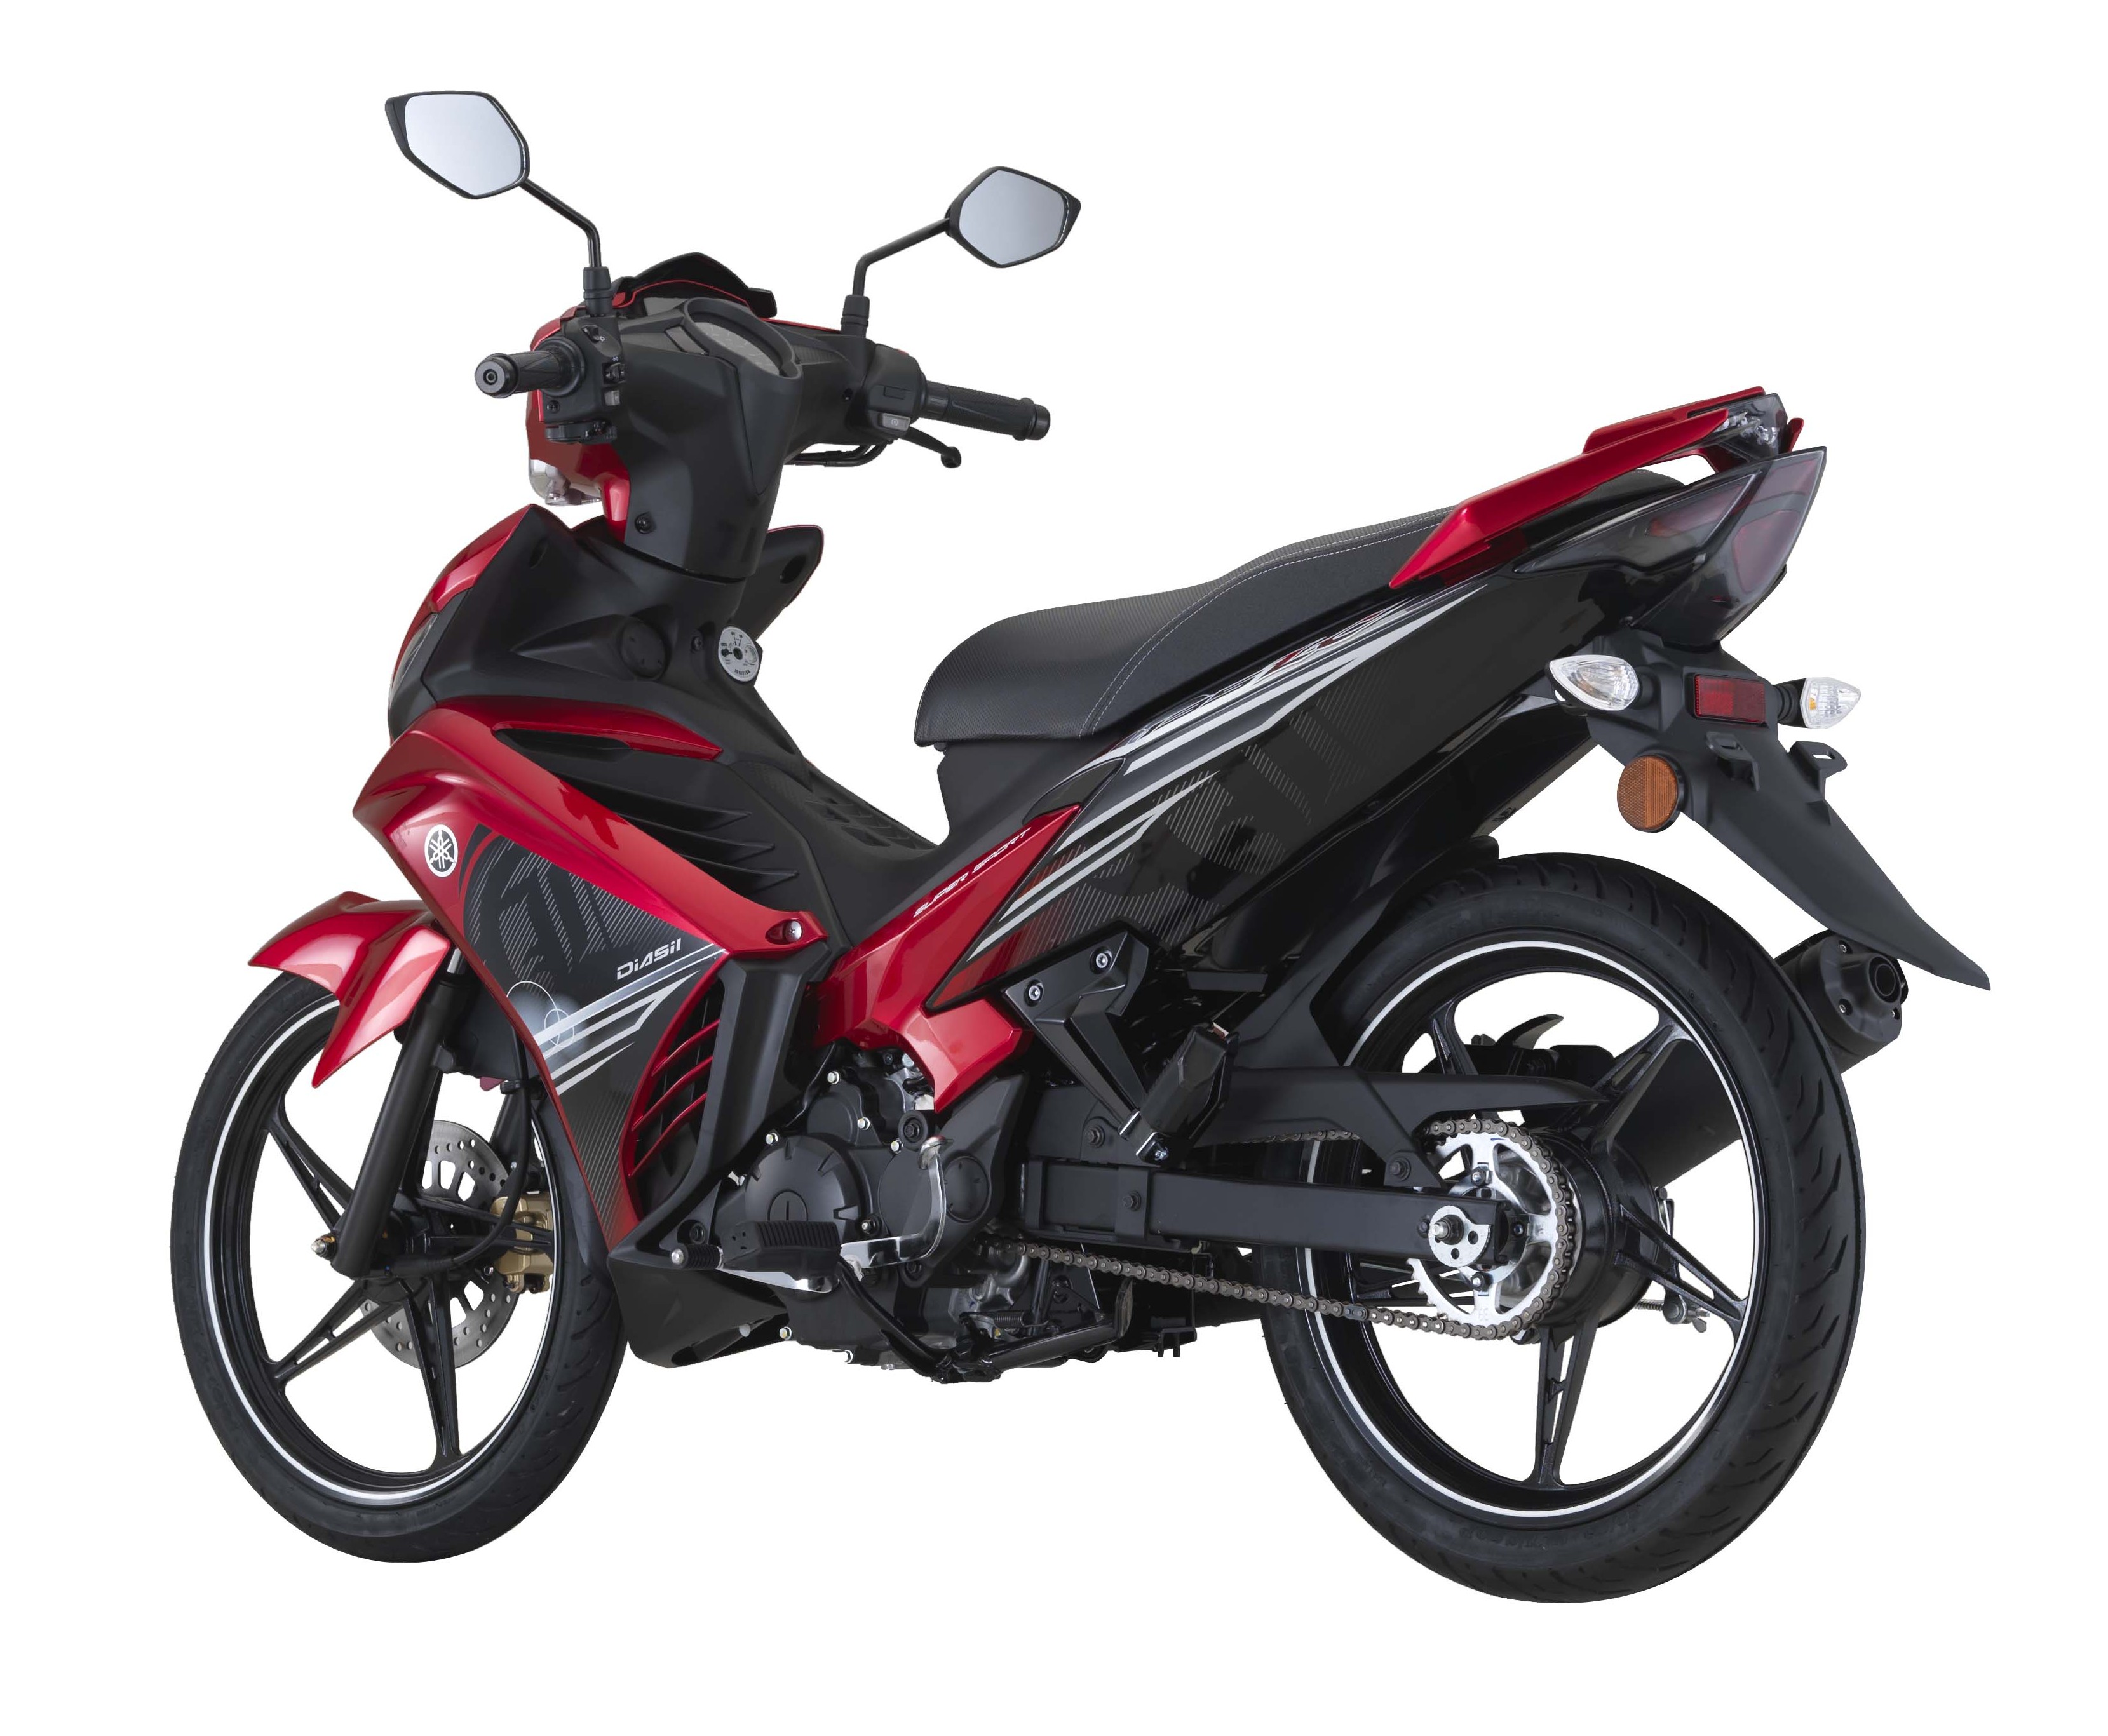 2016 Yamaha 135LC price confirmed, up to RM7,068 2016 Yamaha LC135 ...